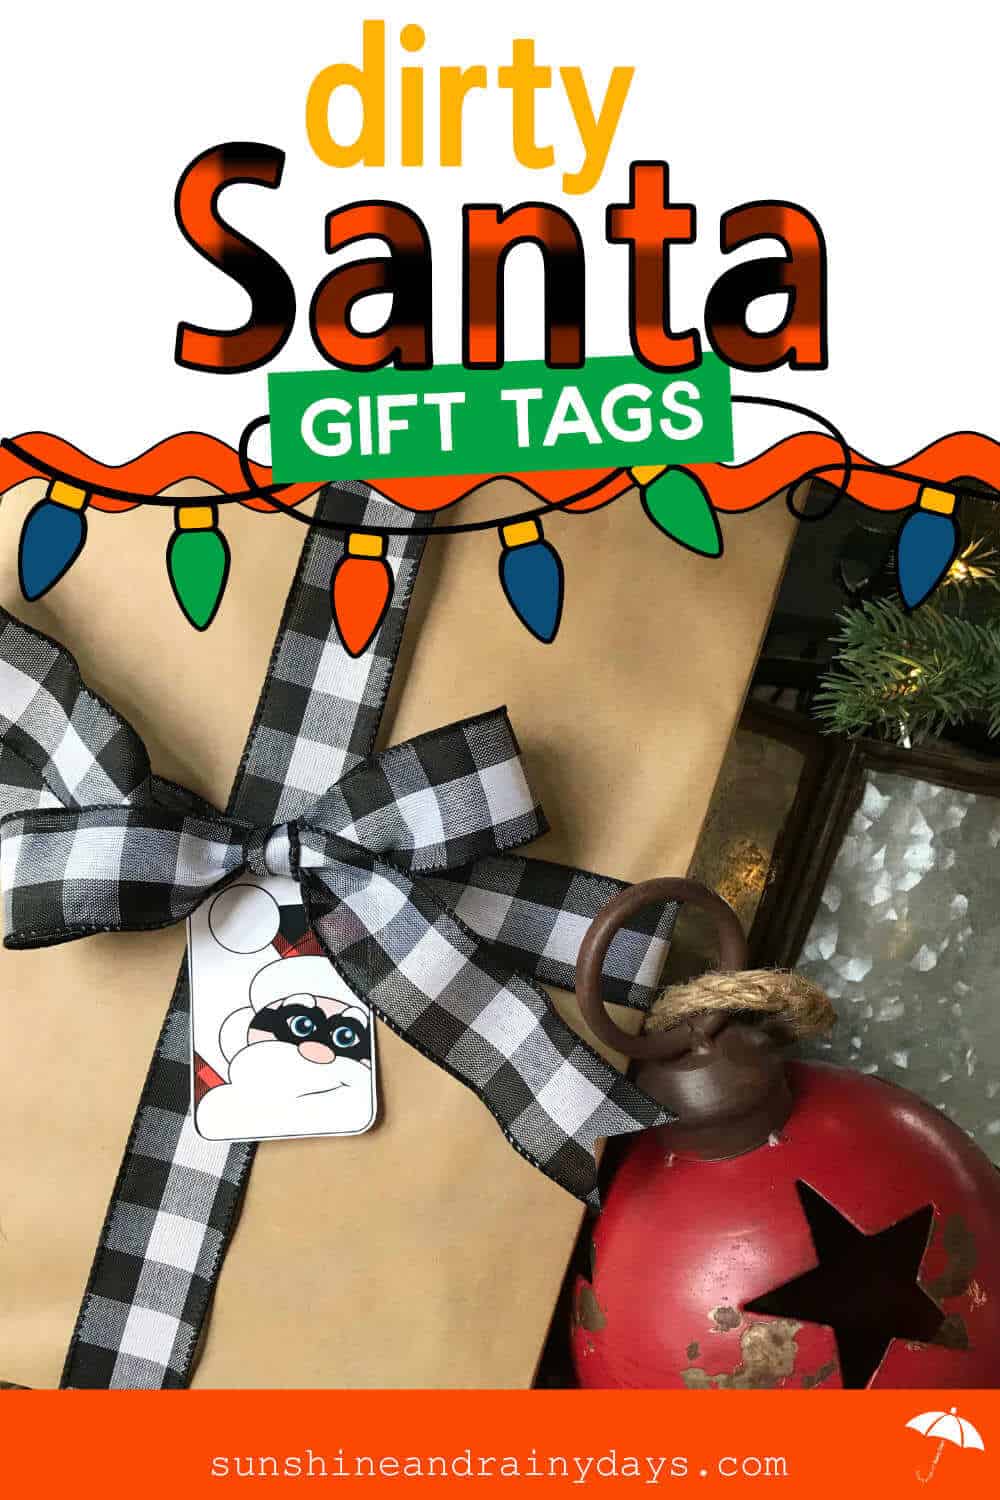 https://sunshineandrainydays.com/wp-content/uploads/2021/01/Dirty-Santa-Gift-Tags-P.jpg